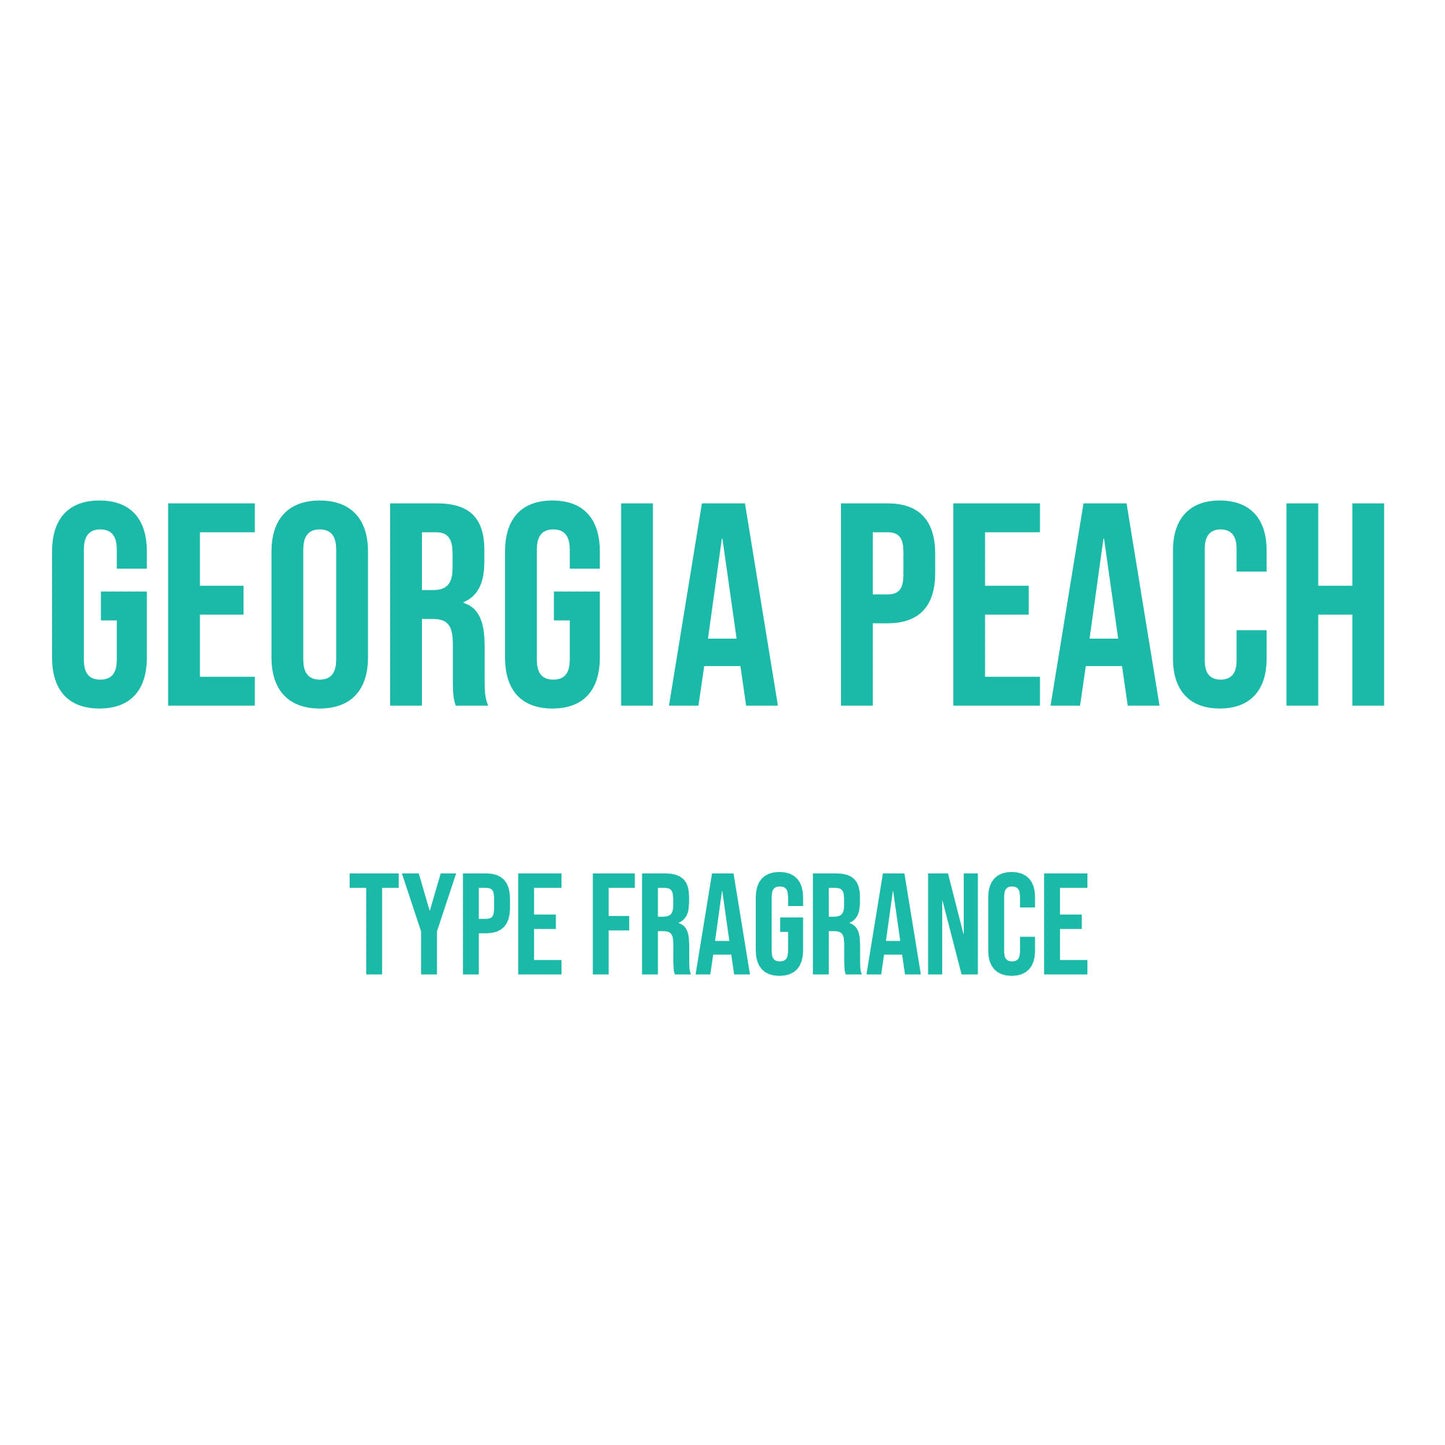 Georgia Peach Type Fragrance